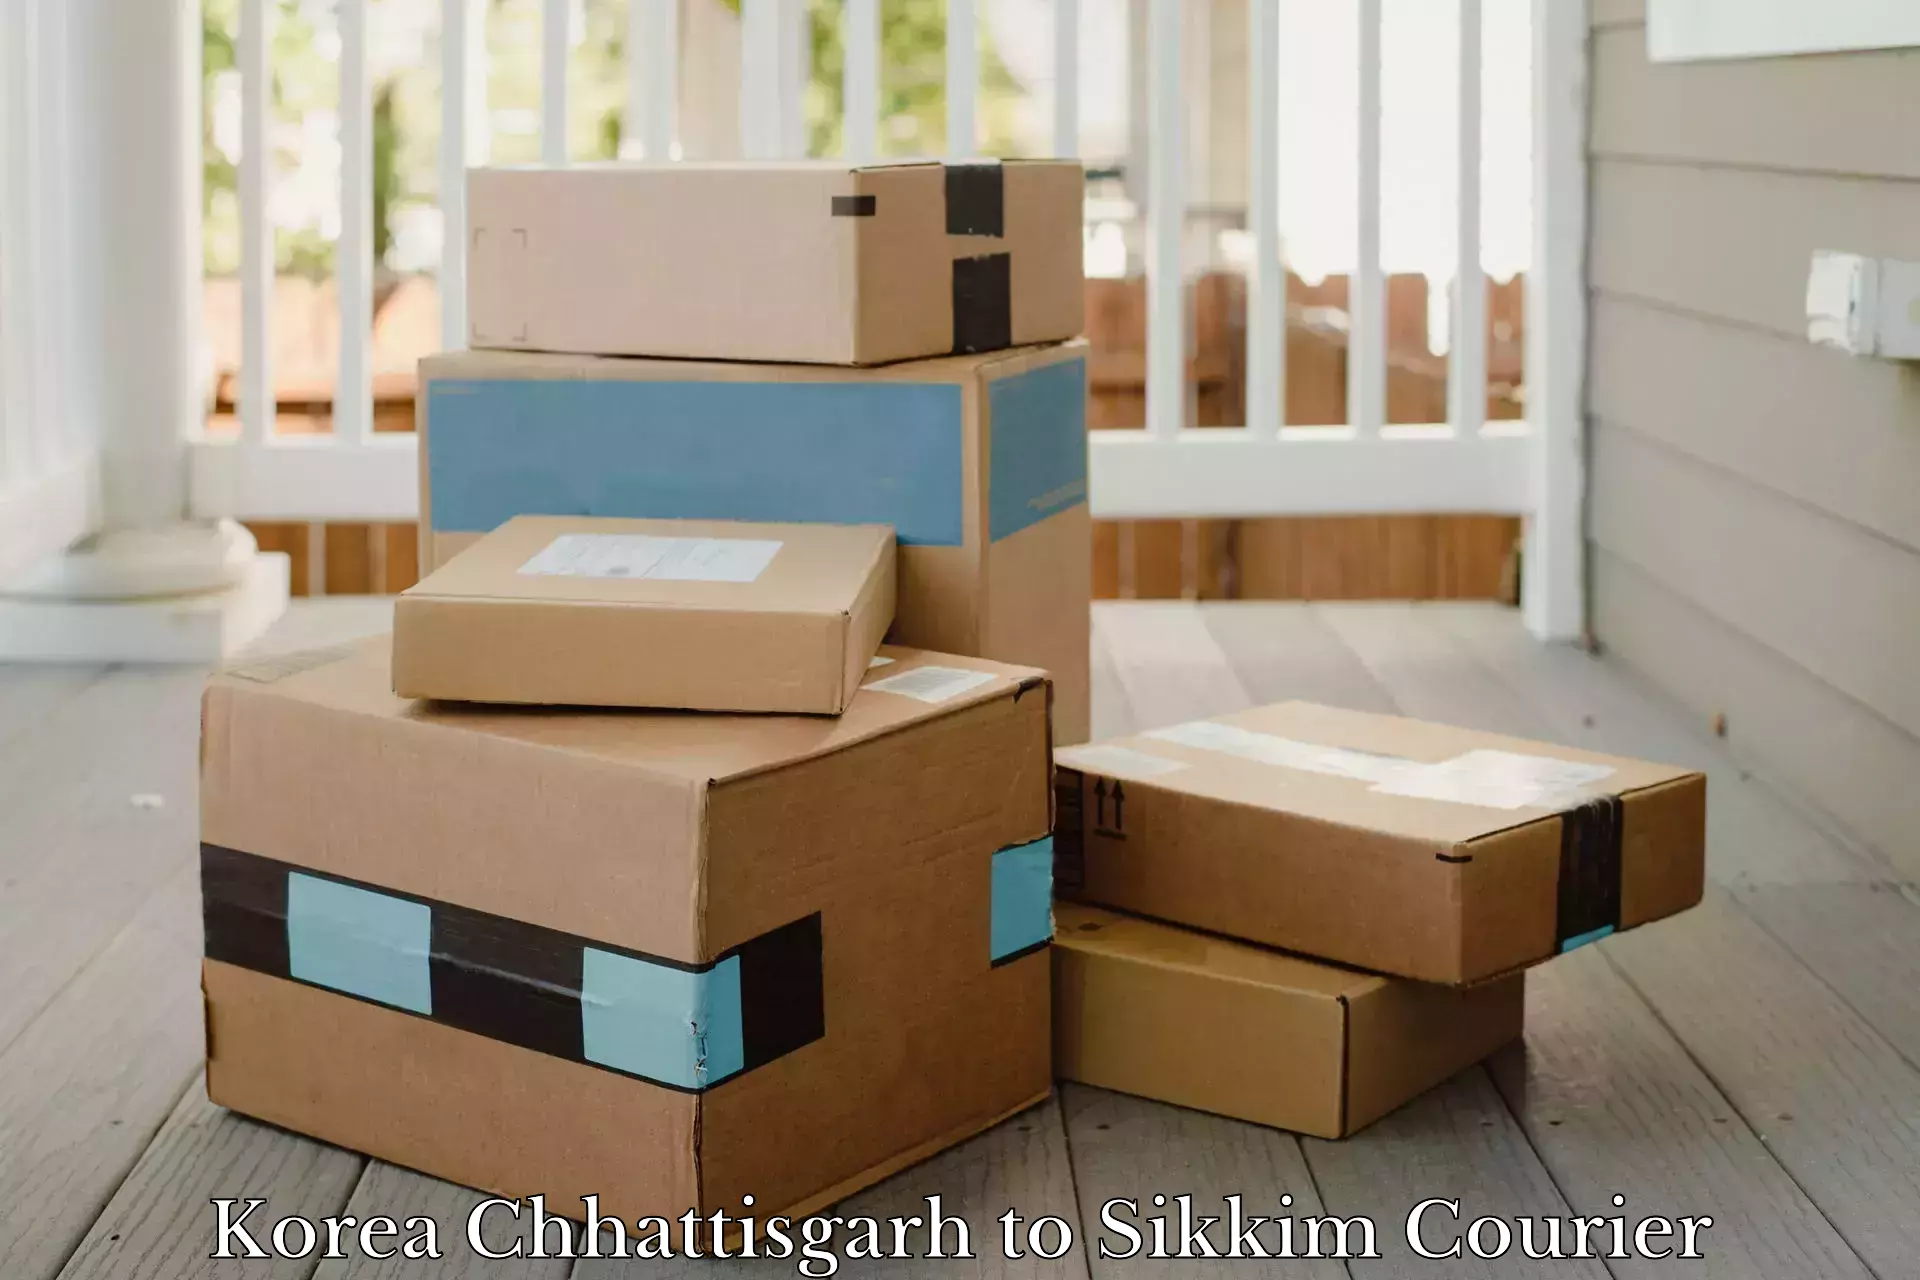 High-priority parcel service in Korea Chhattisgarh to Pelling